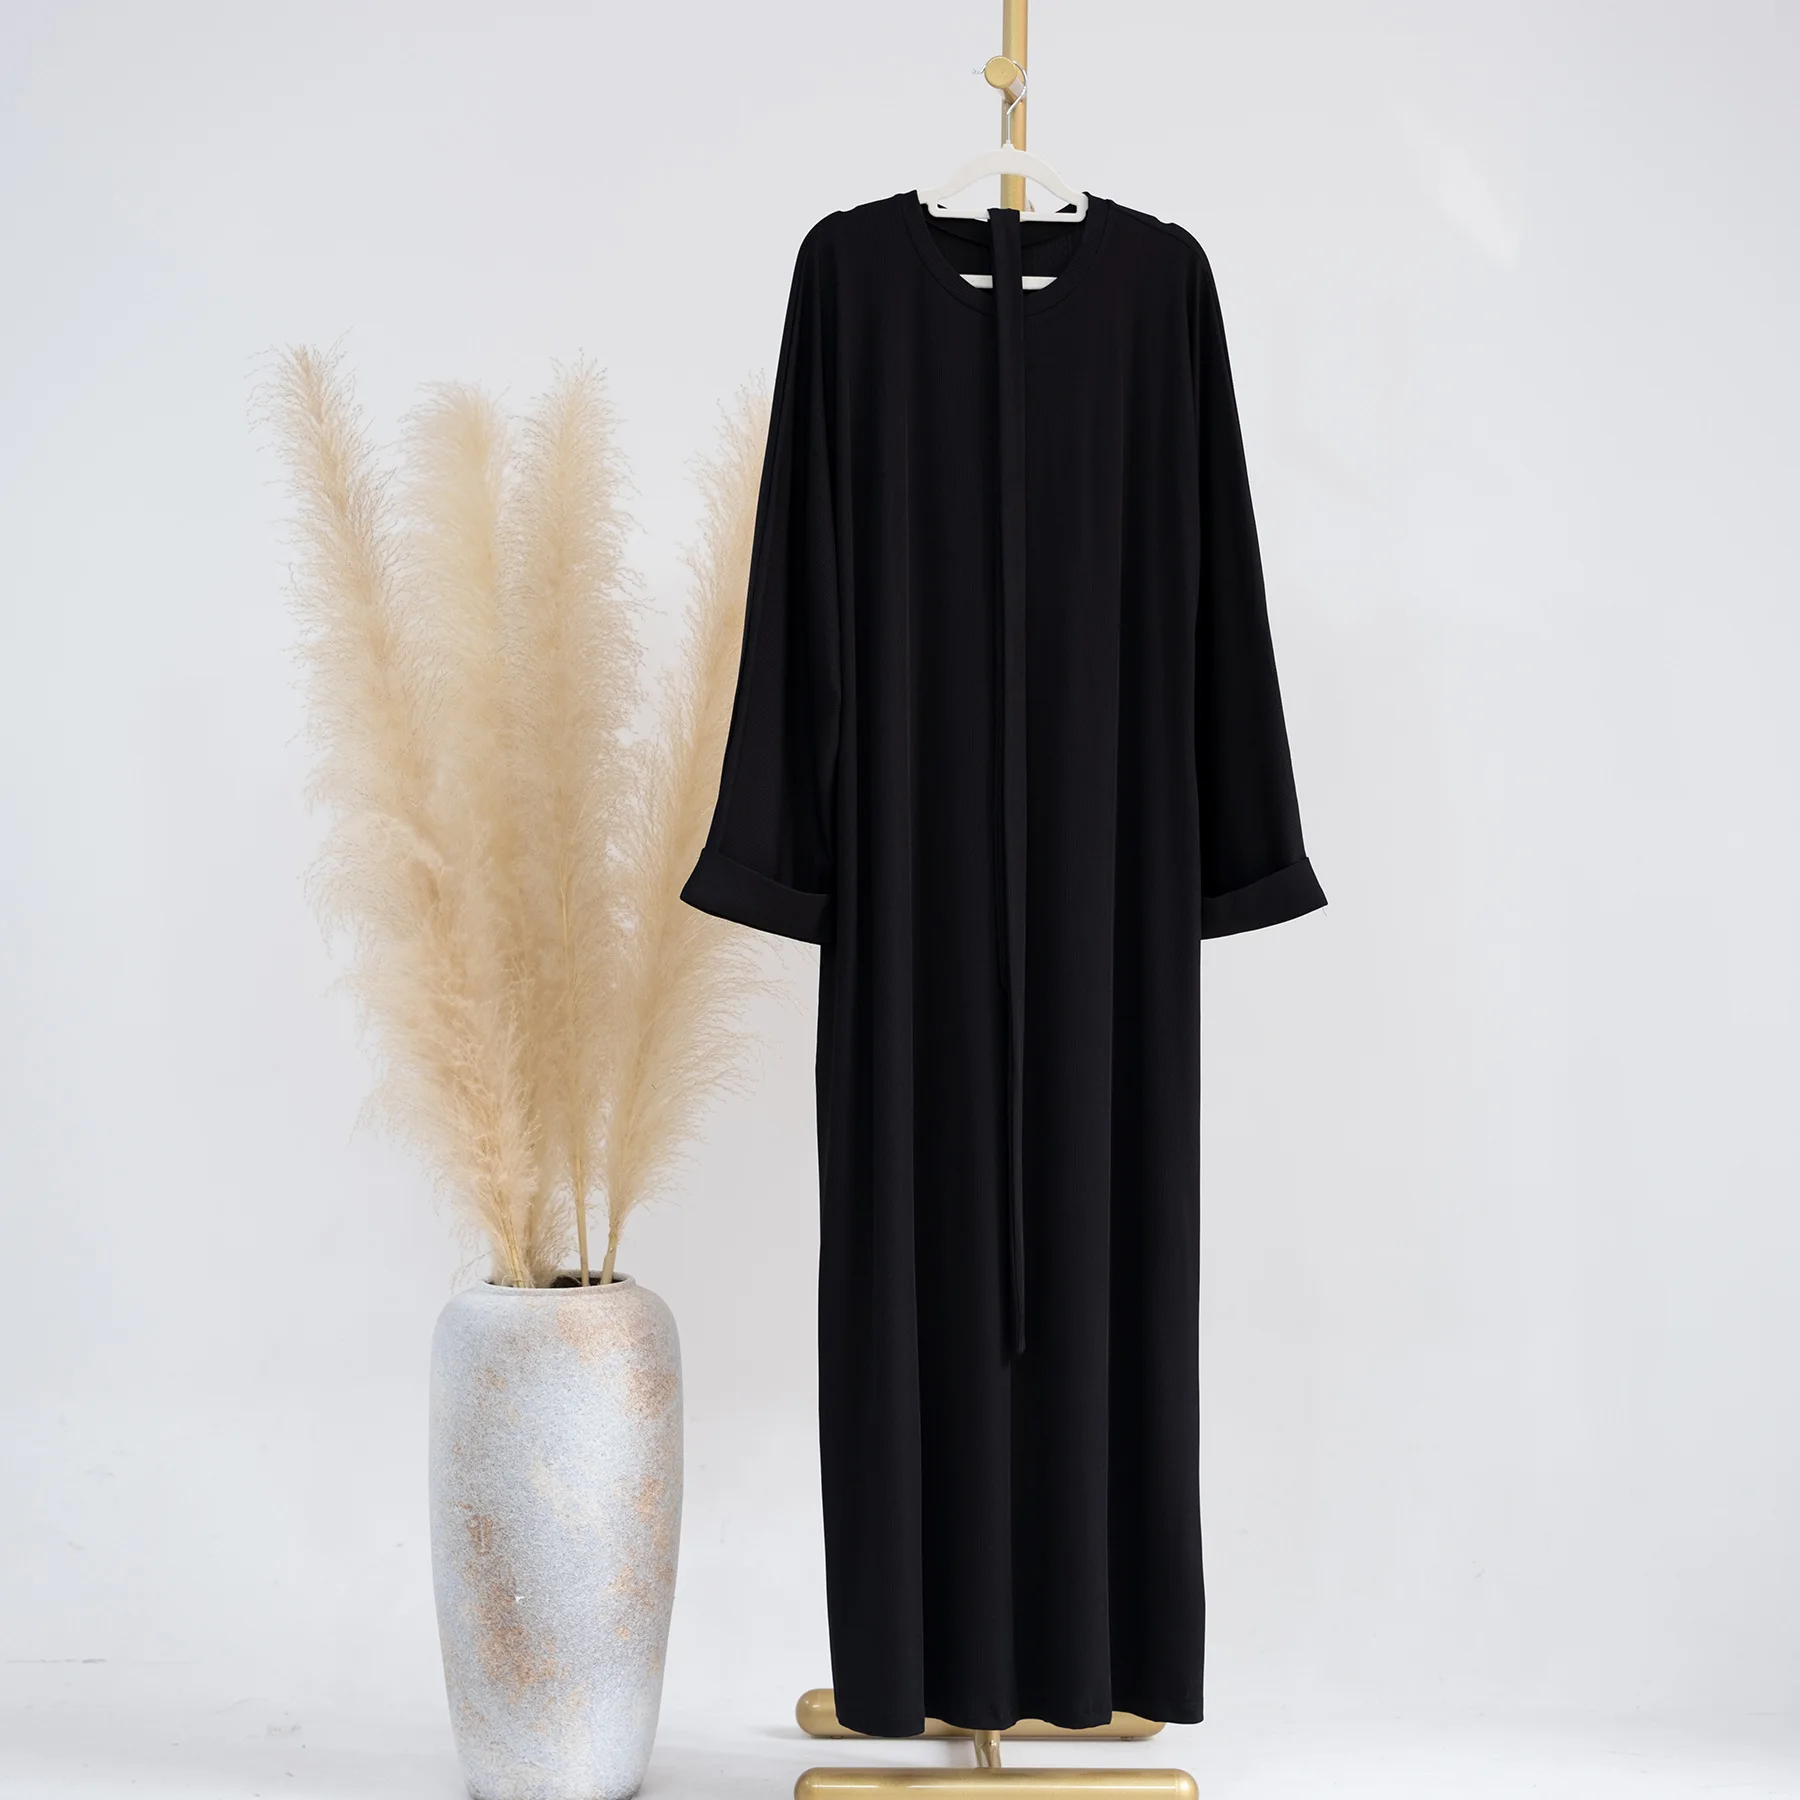 

Middle East Dubai style Islamic national dress abaya winter Muslim dress knitted robe black abaya